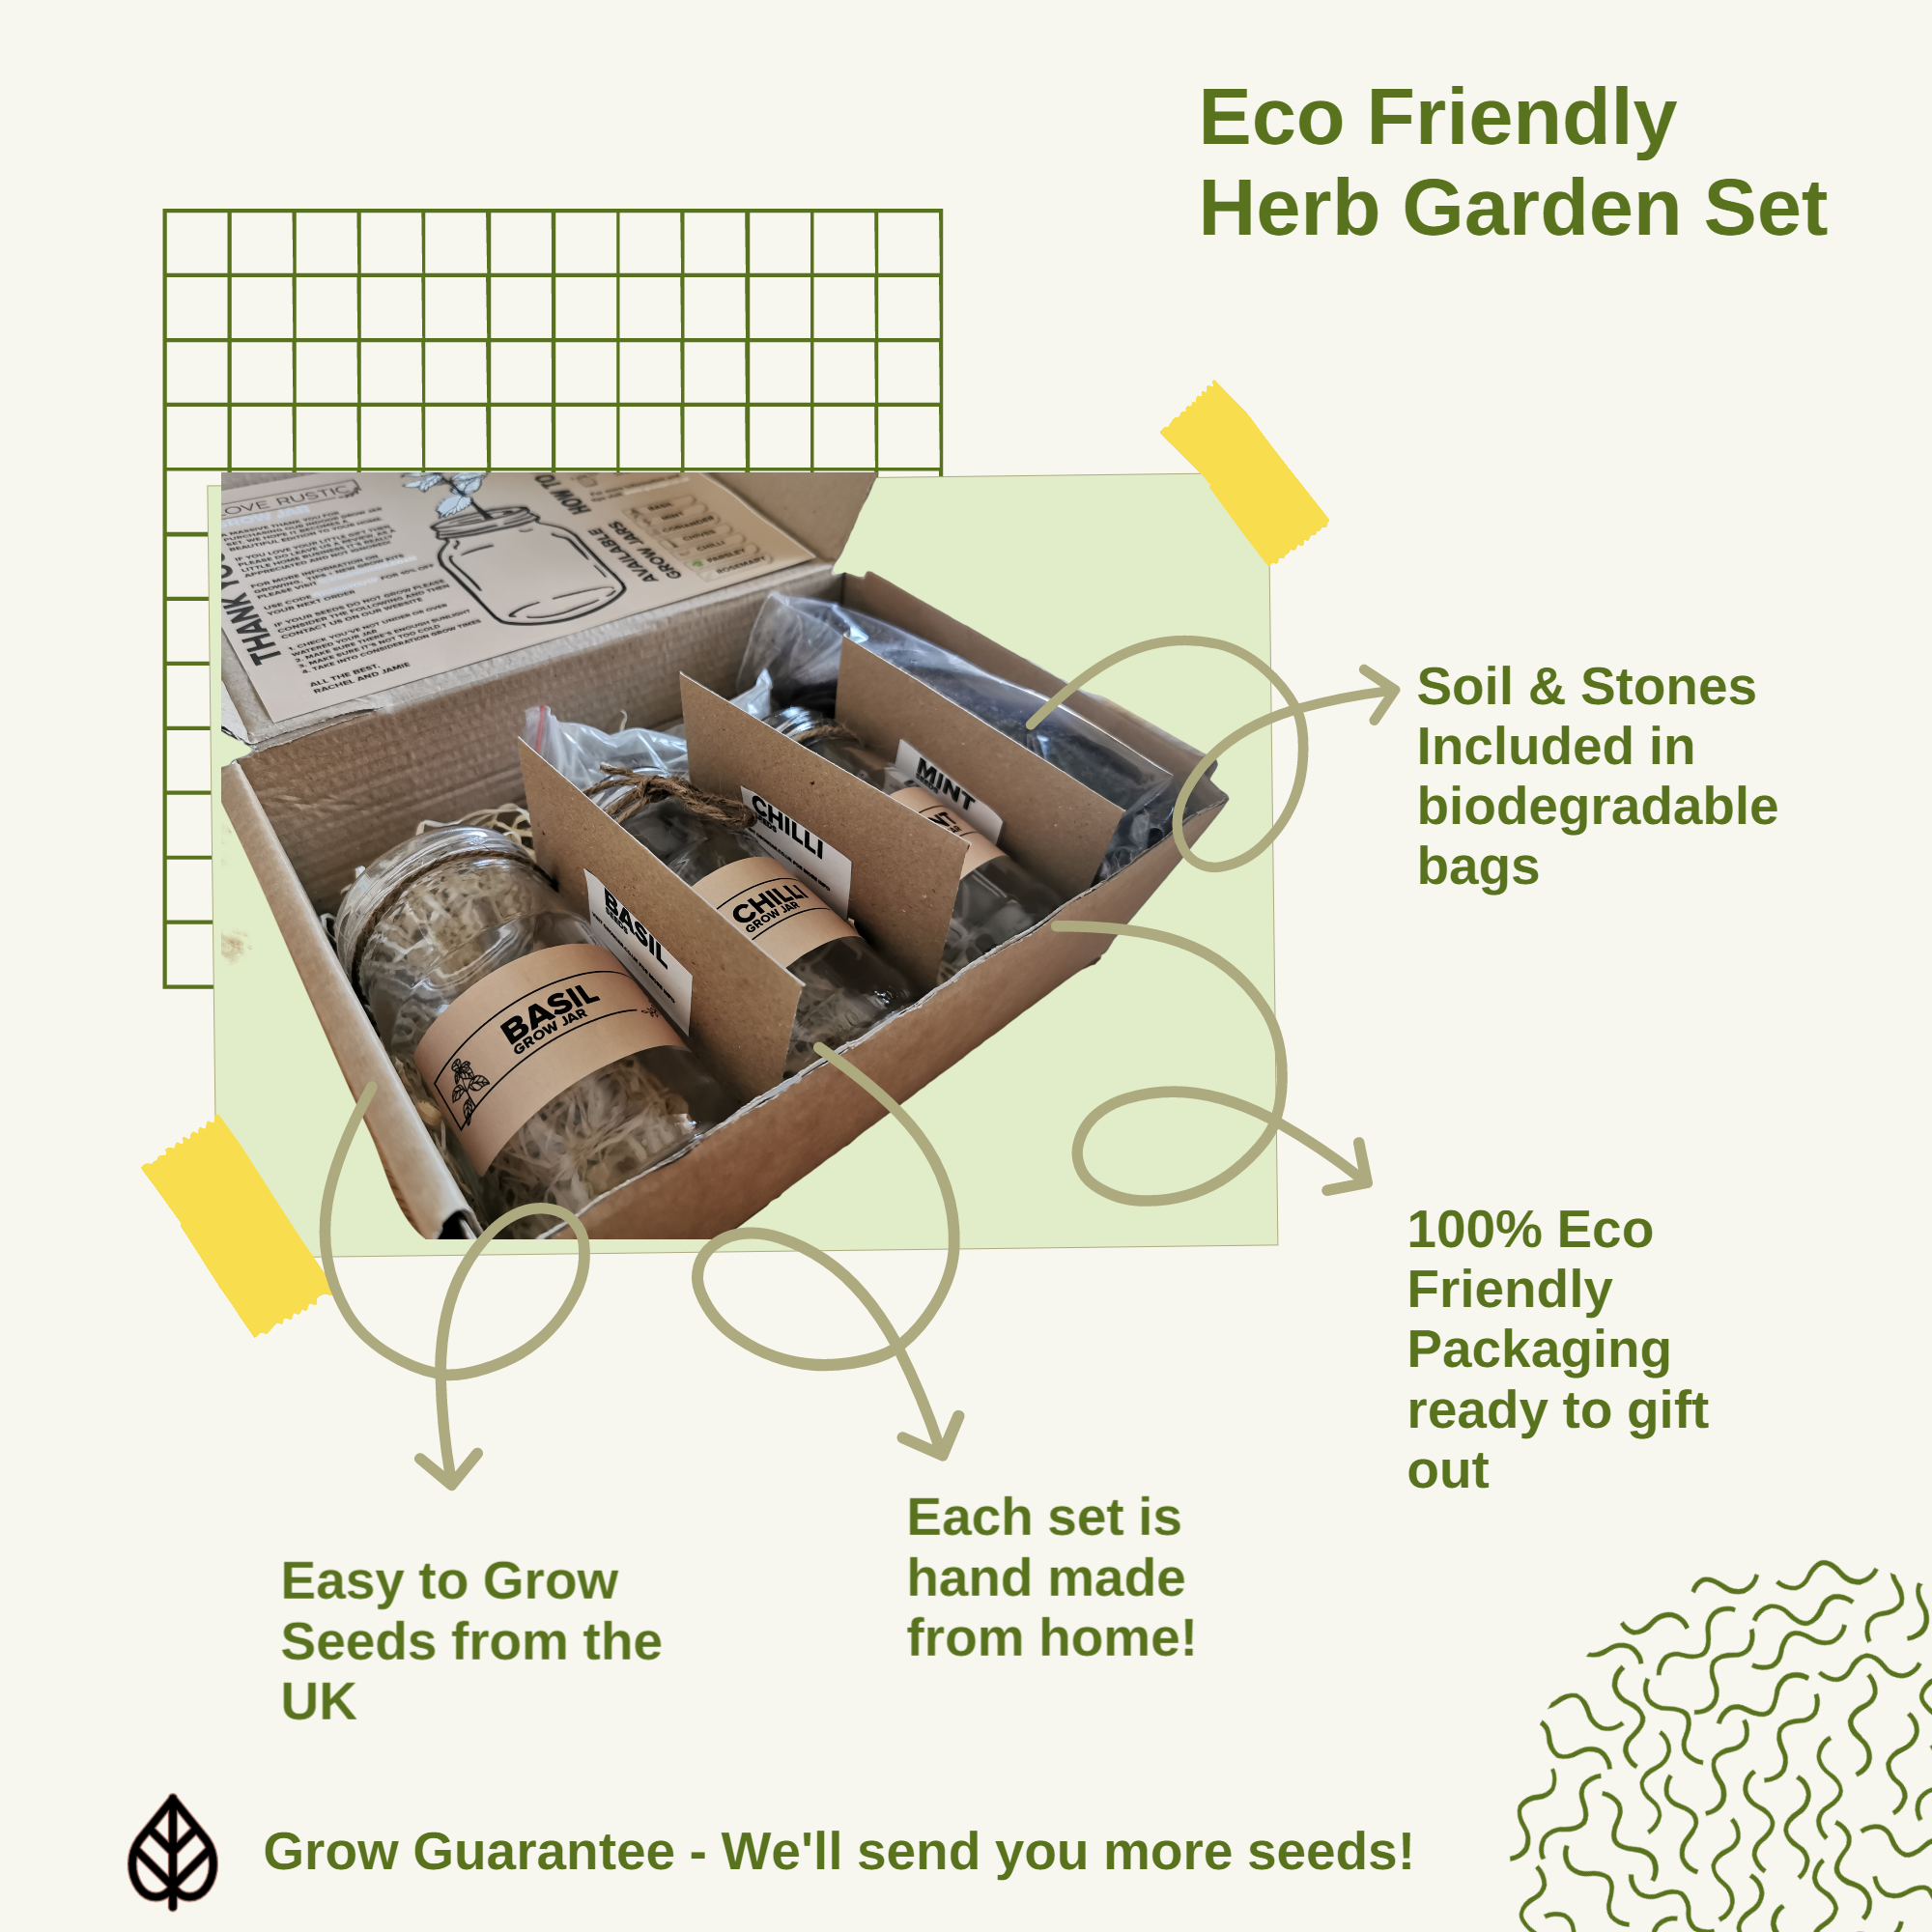 eco friendly gift - herb garden